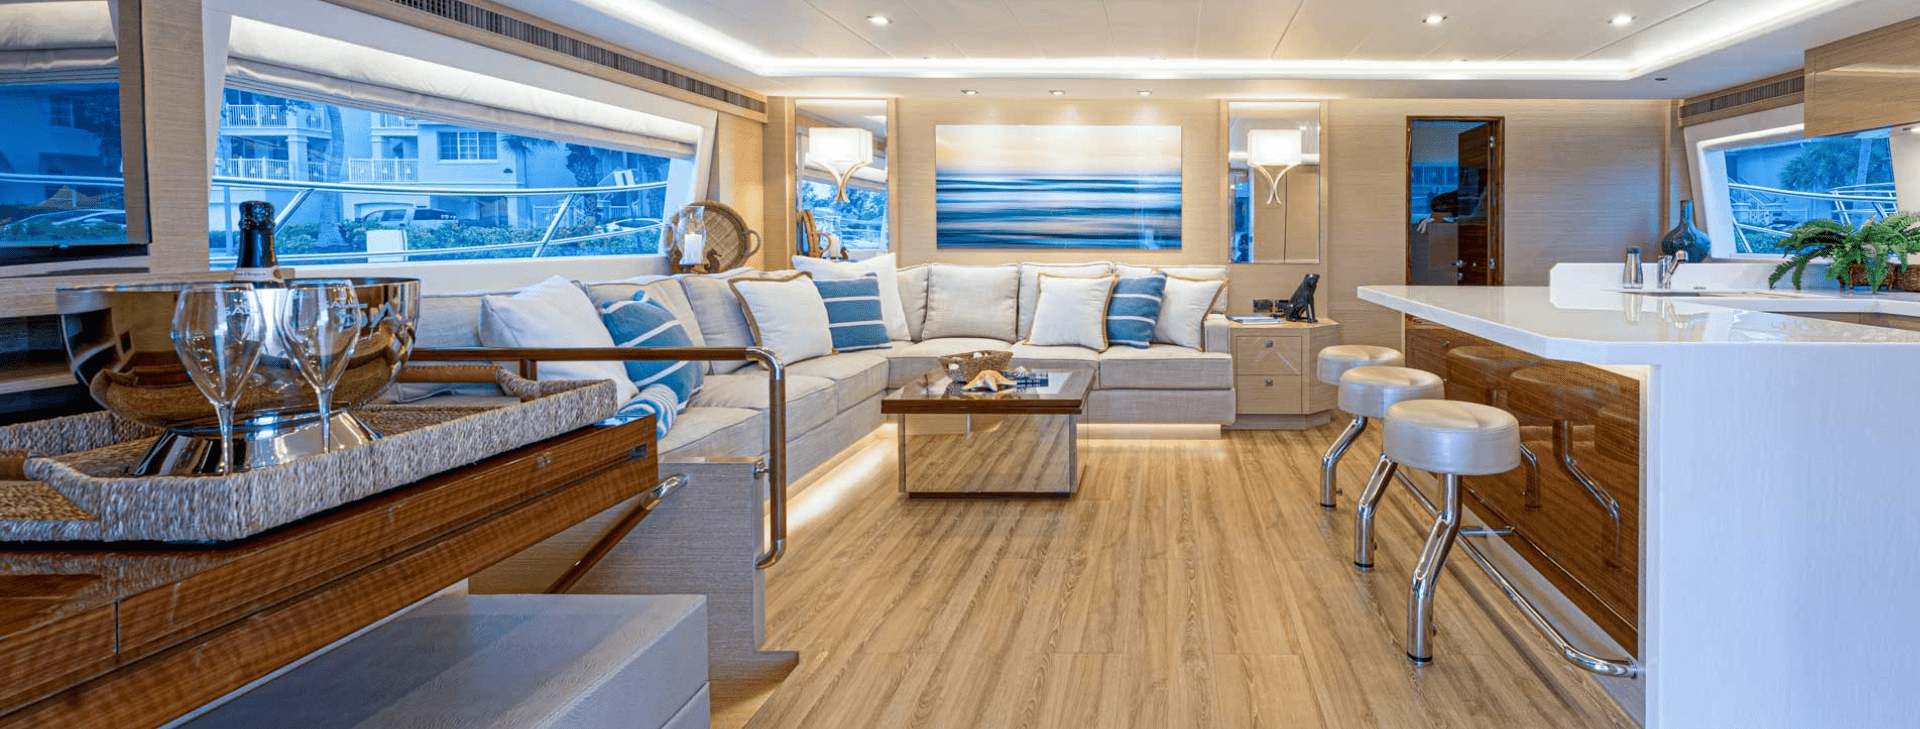 Luxurious interior of a ship with sofa set